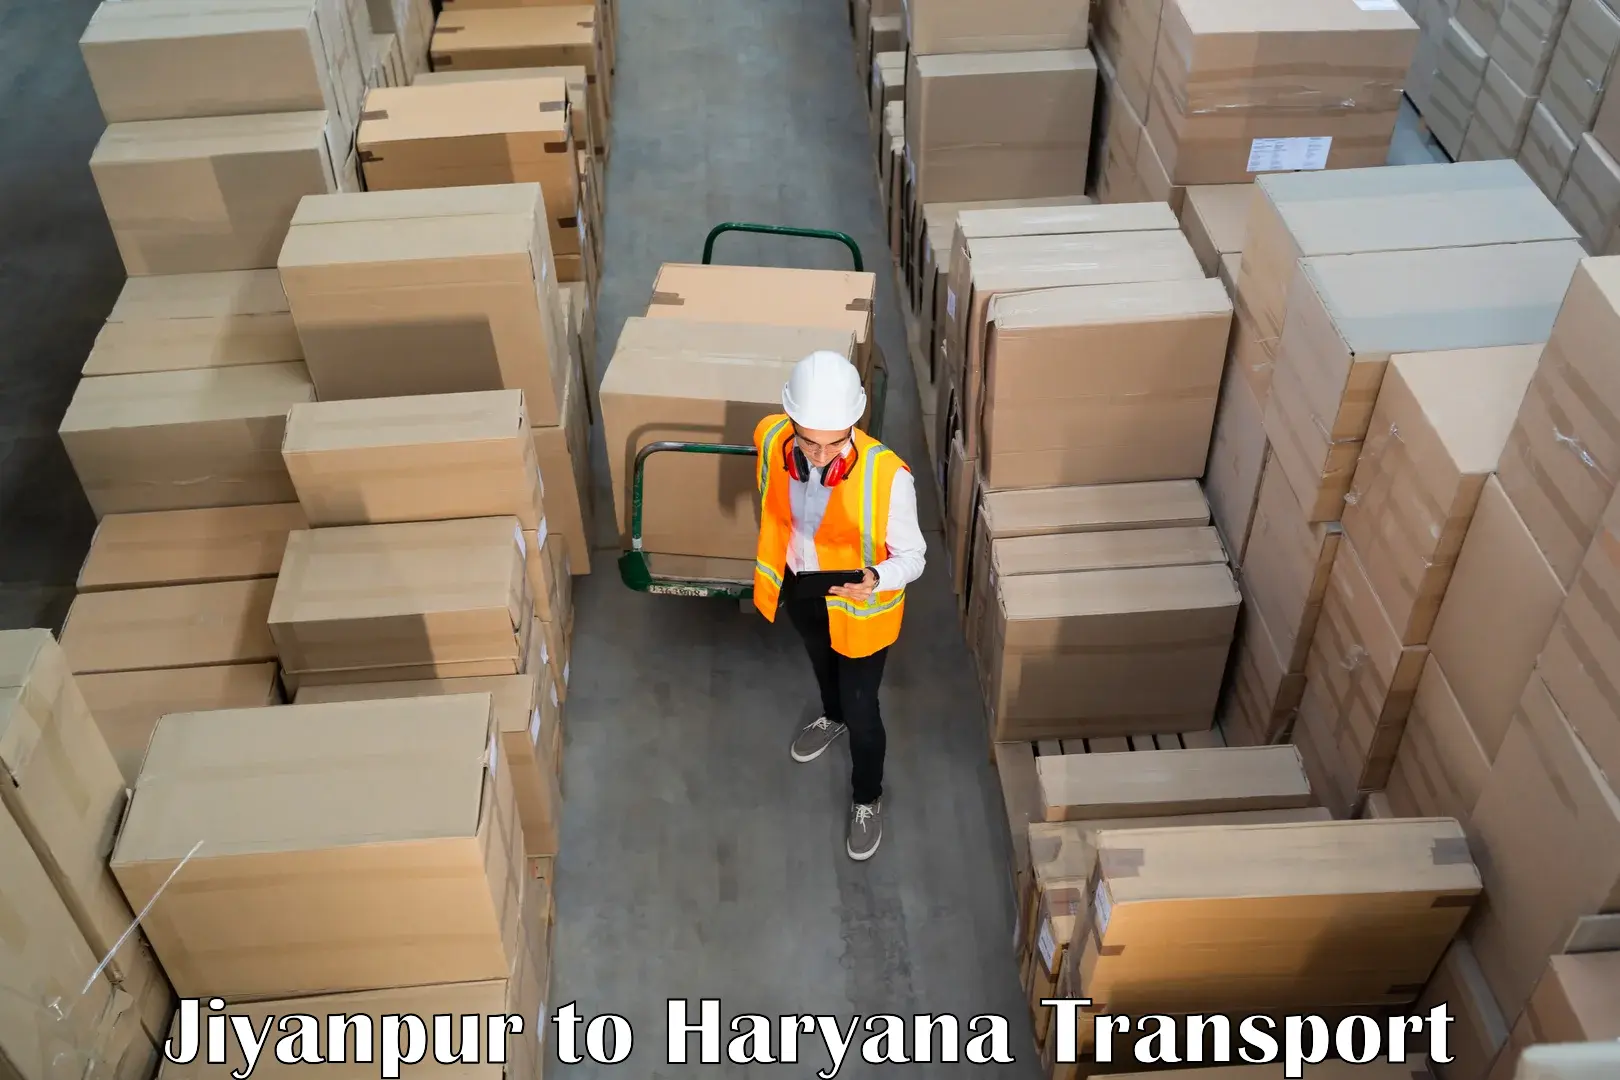 Transport in sharing in Jiyanpur to Haryana